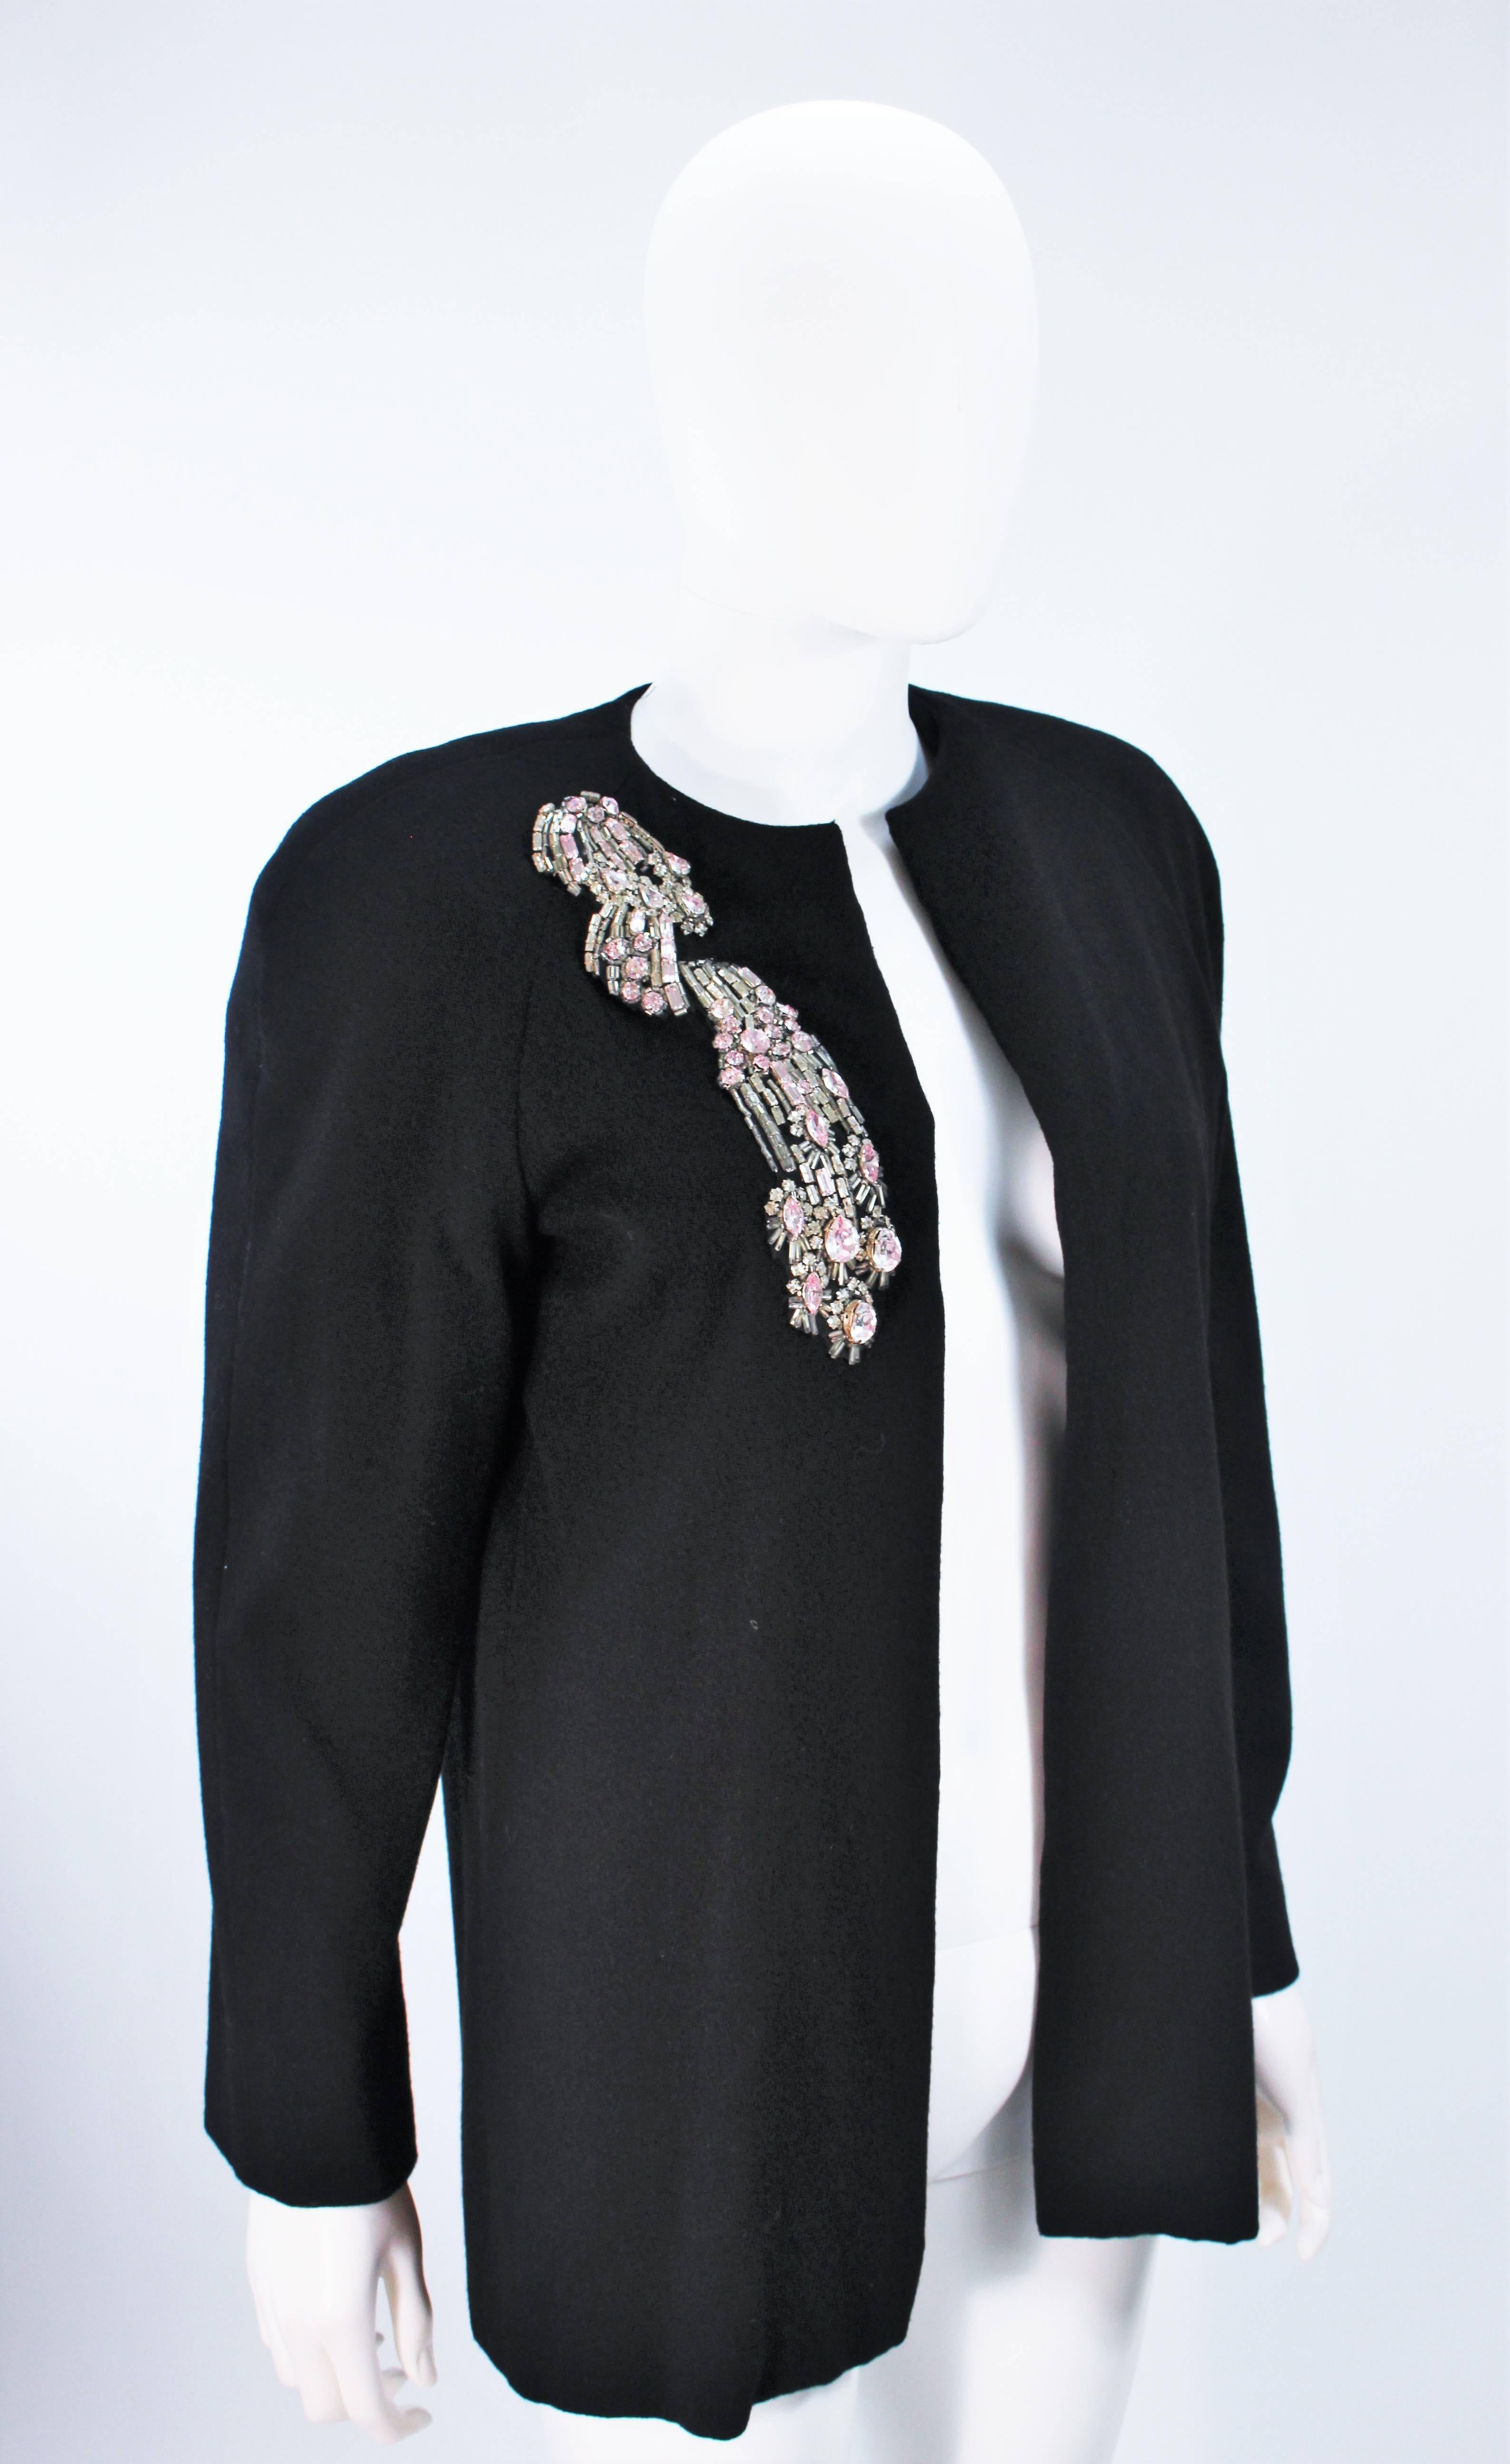 Women's CAROLYN ROEHM Black Knit Wool Jacket with Rhinestone Applique Size 6-10